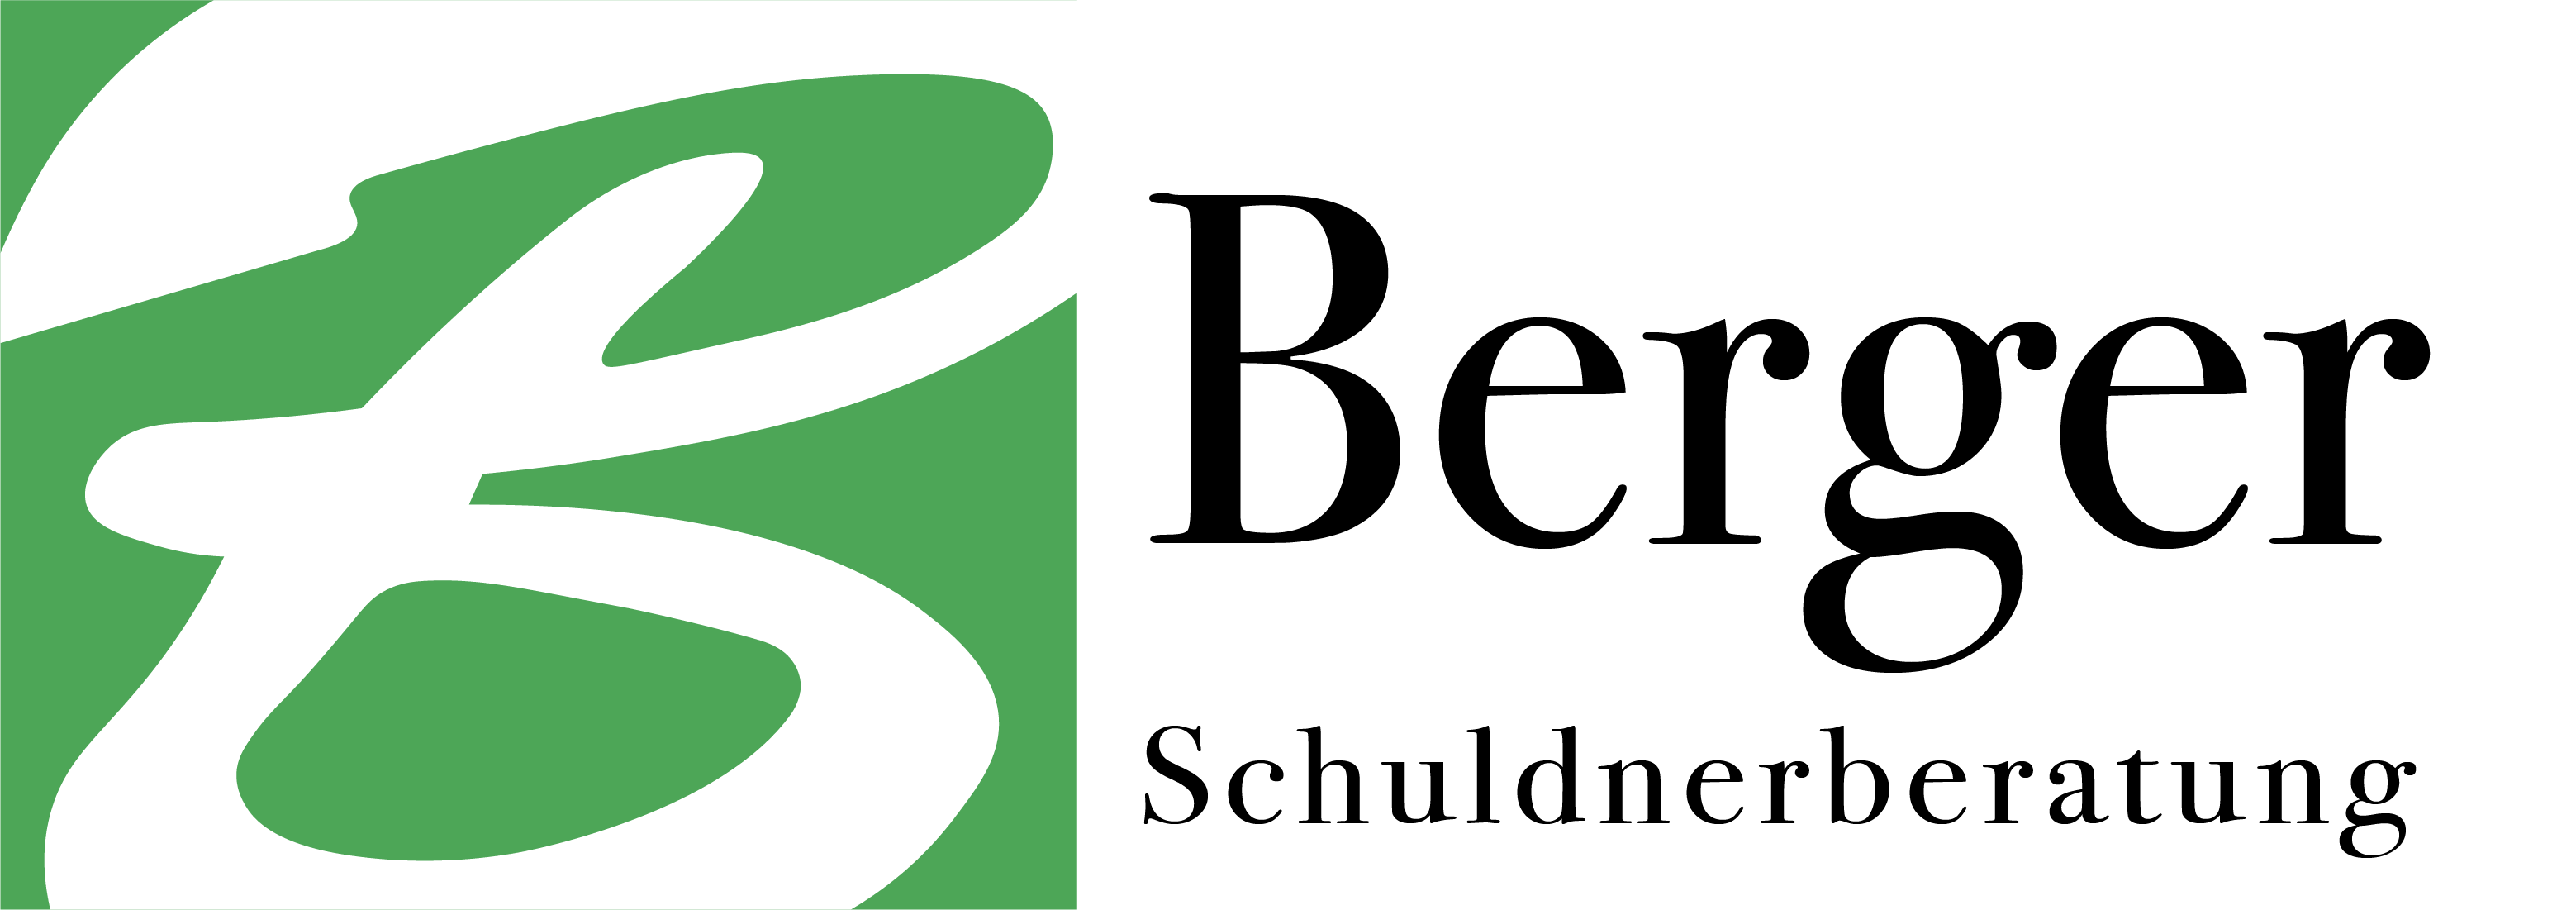 Logo_Schuldnerberatung_grün-12